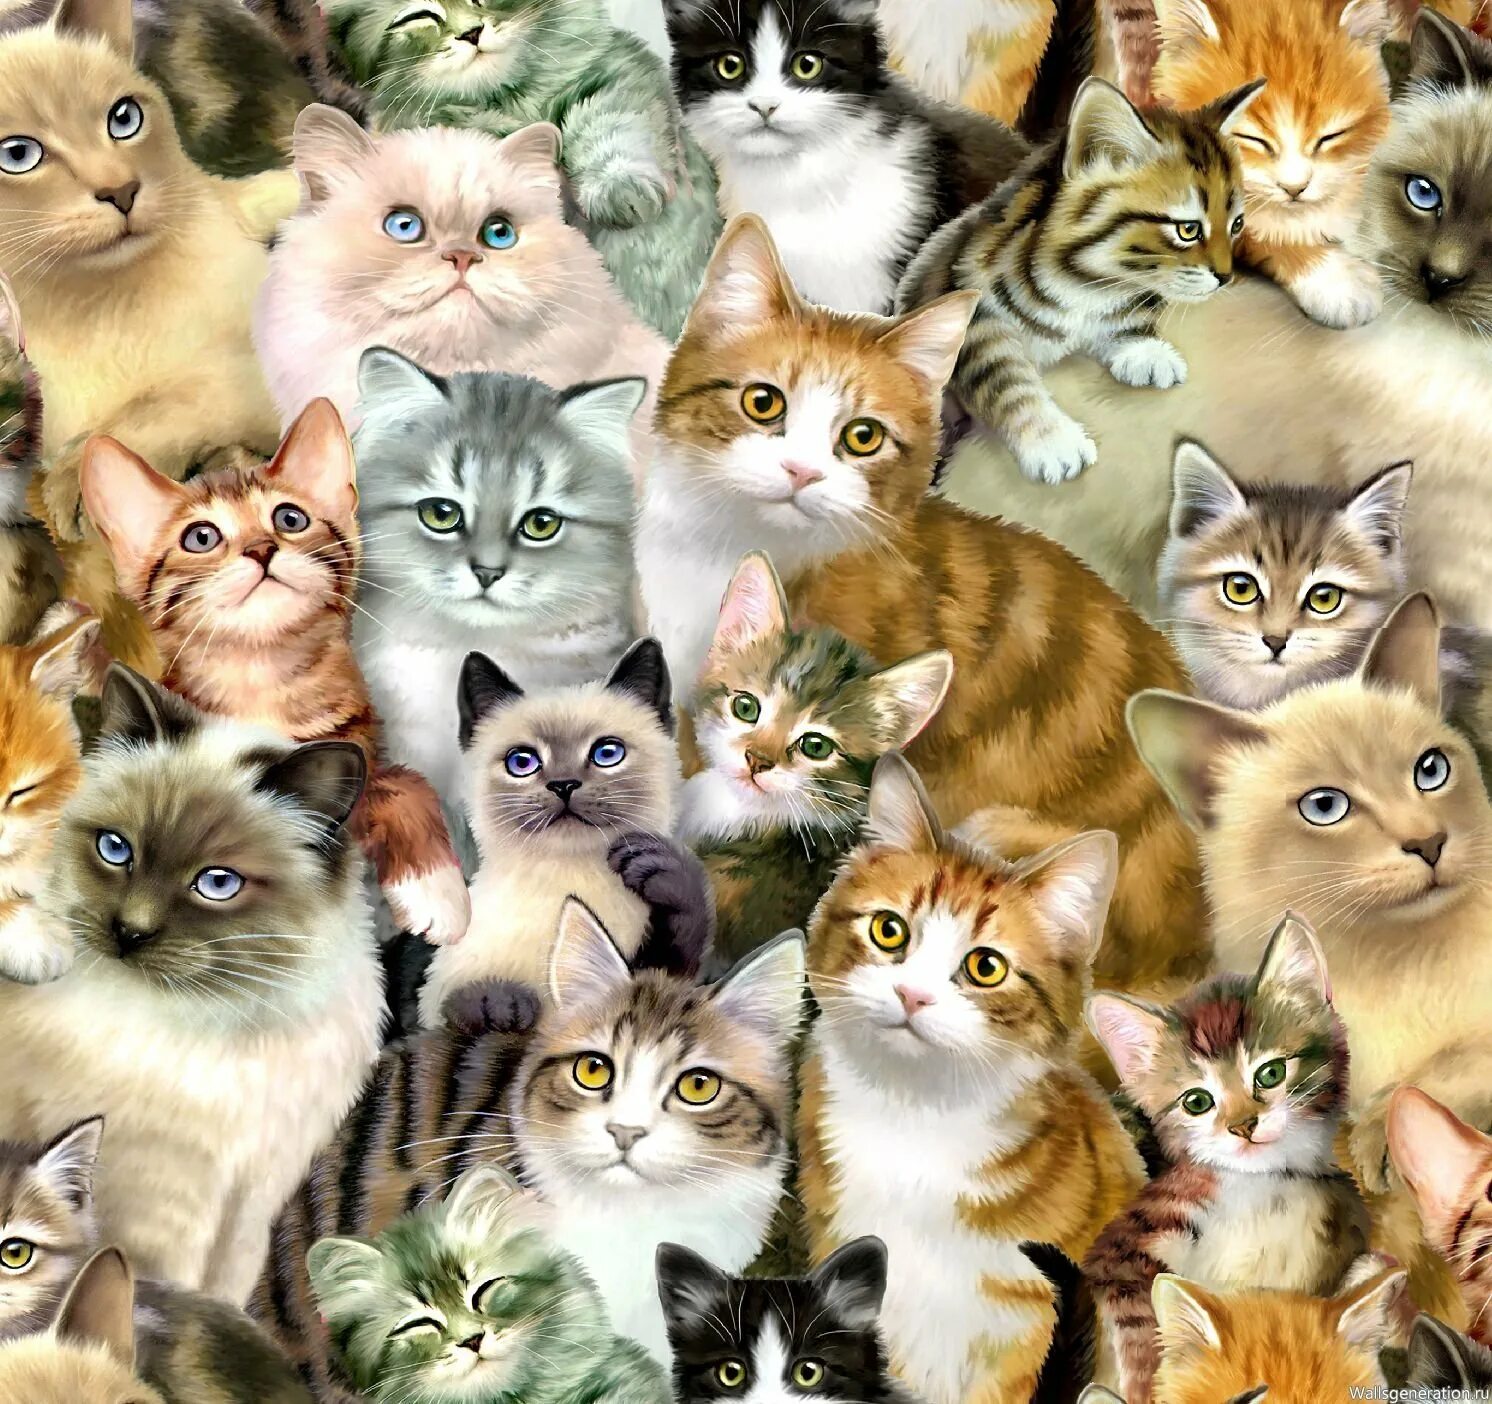 Кошка много цветов. Много кошек. Много котят. Кошки разных цветов. Котики много котикиков.